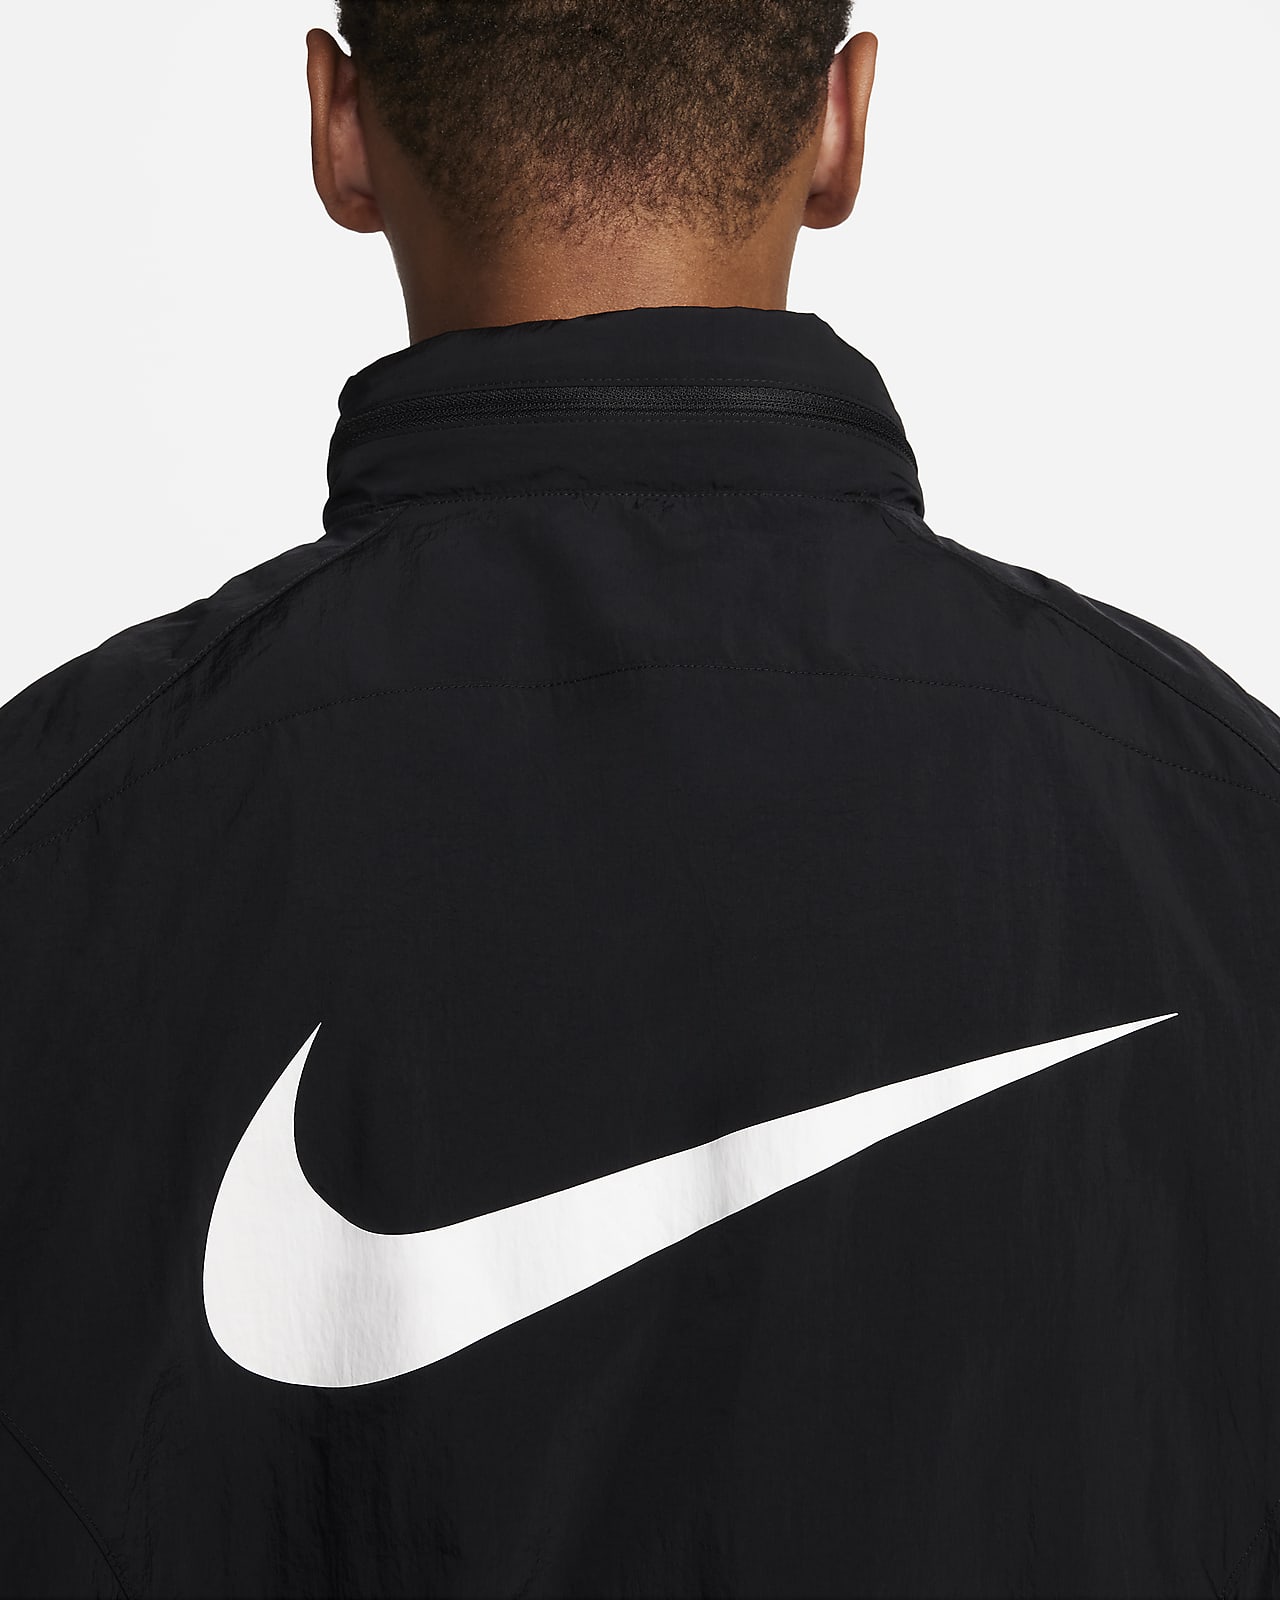 Men's Therma-FIT Repel Jacket, Nike